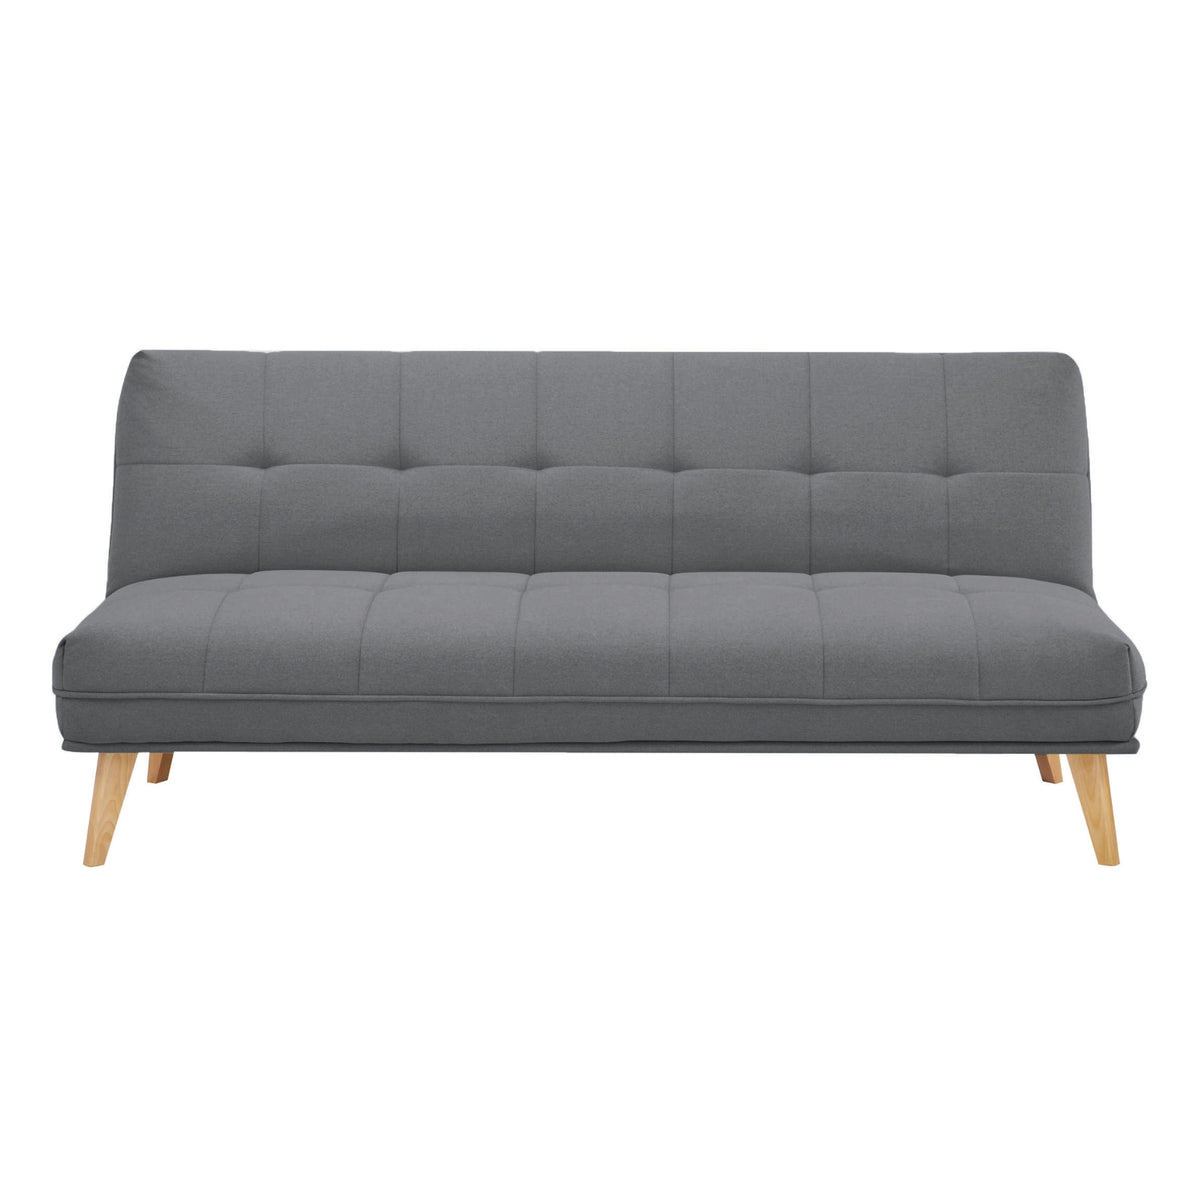 Jovie 3 Seater Fabric Sofa Bed Mid Grey 